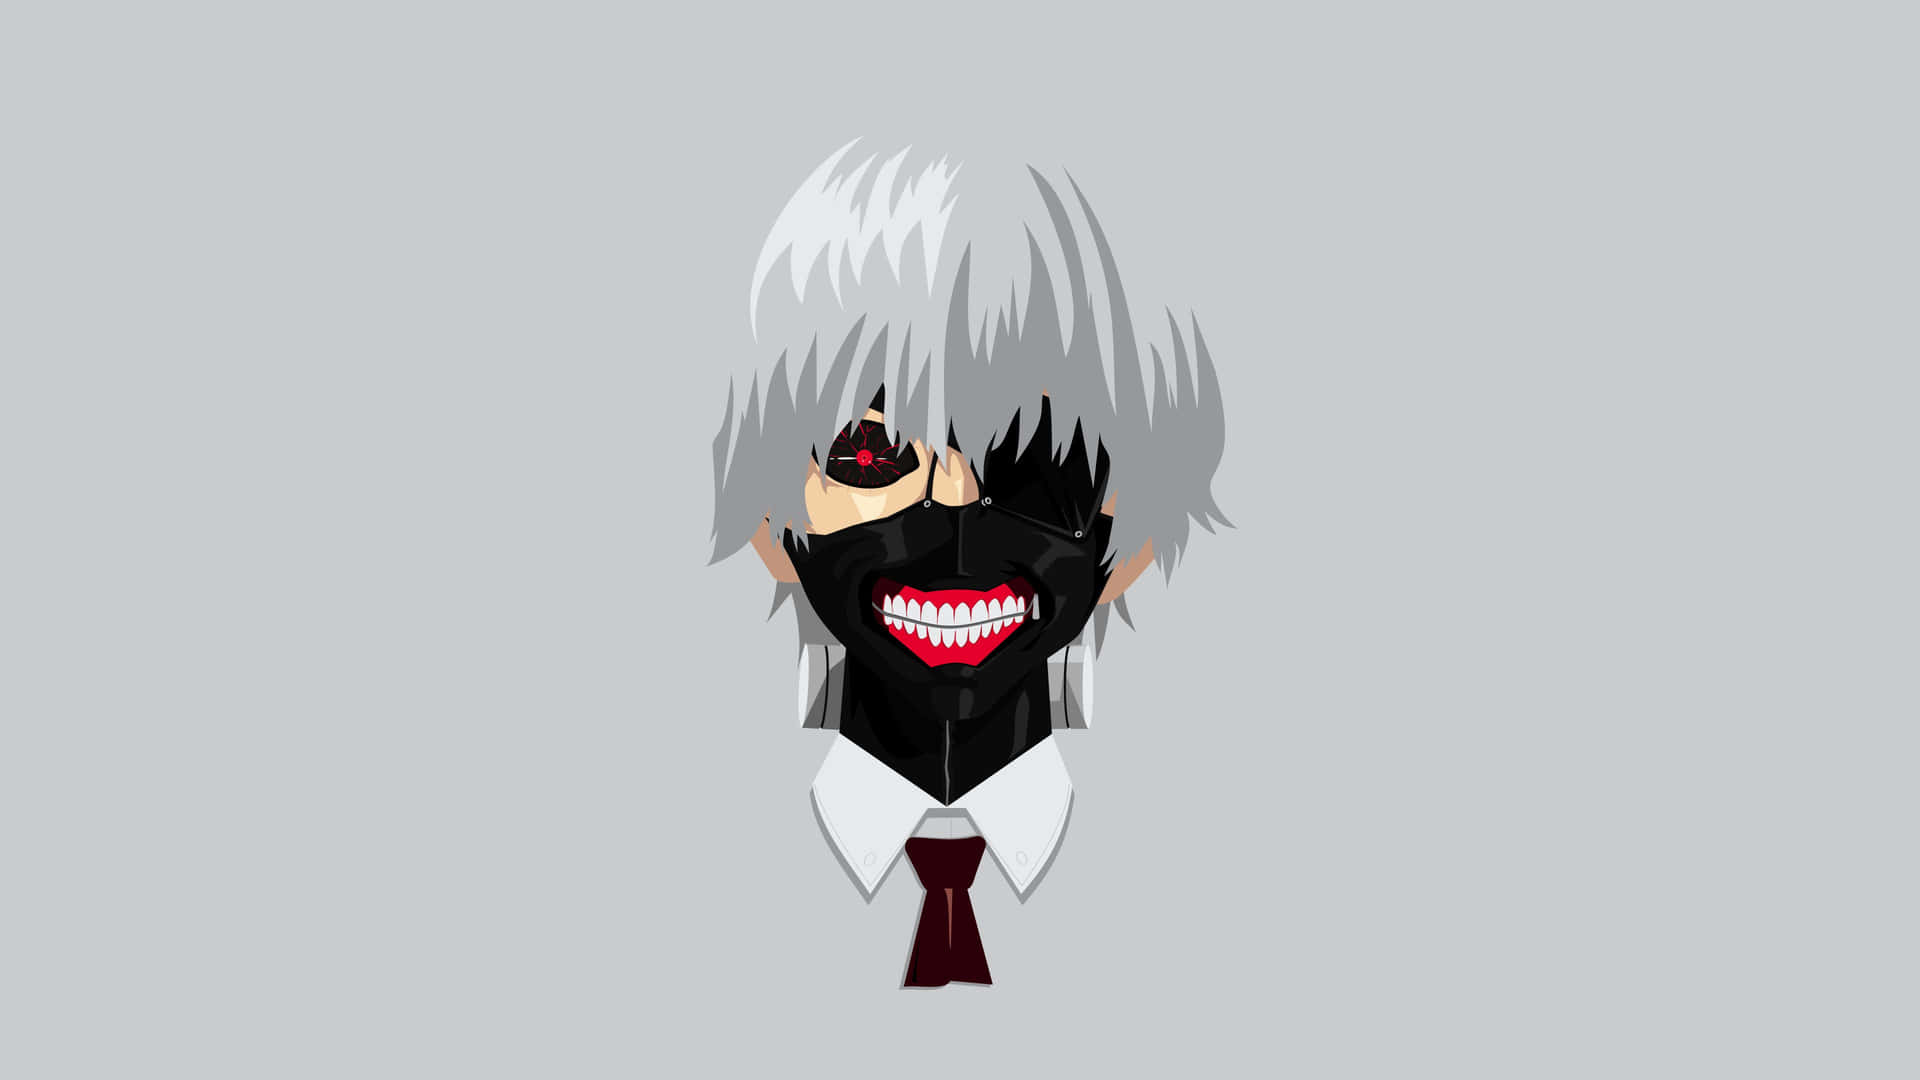 Kanekiken En Forma De Ghoul, Estilo Minimalista De Anime. Fondo de pantalla